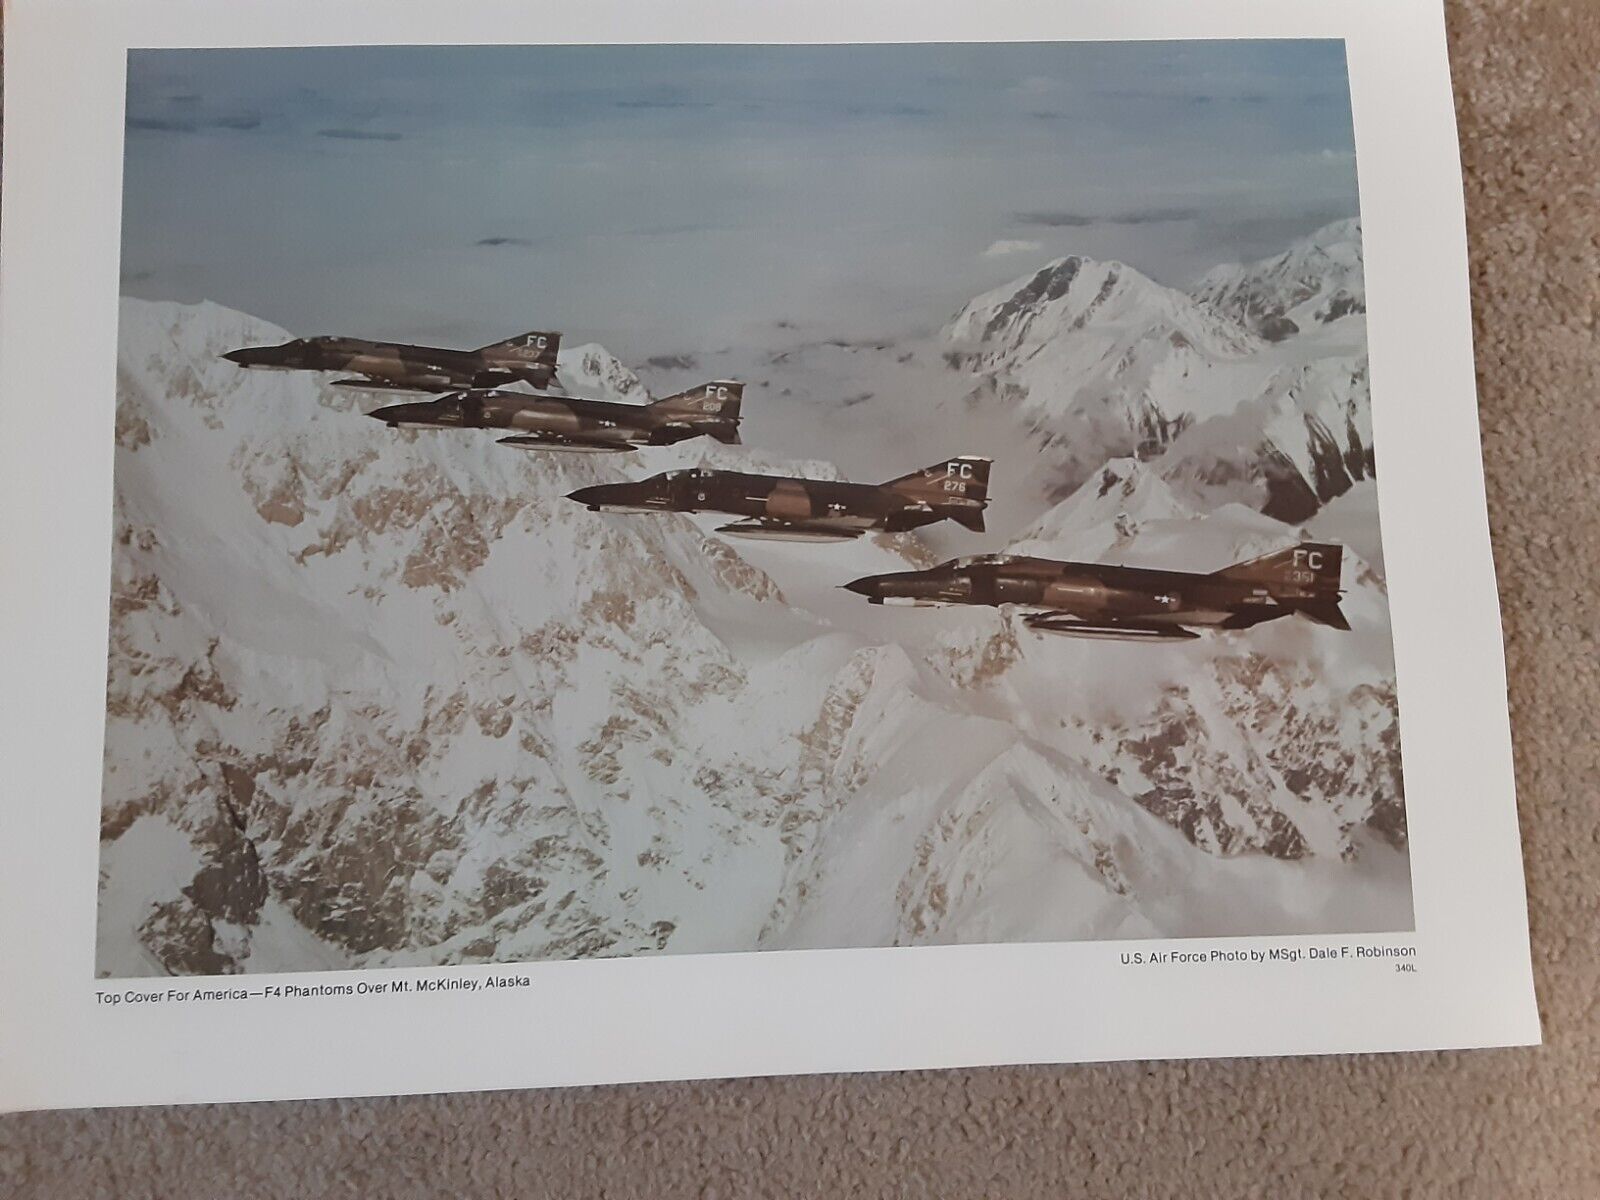 VTG F-4 PHANTOMS OVER MT.MCKINLEY,ALASKA U.S.AIR FOR E PHOTOGRAPH 22 BY 17